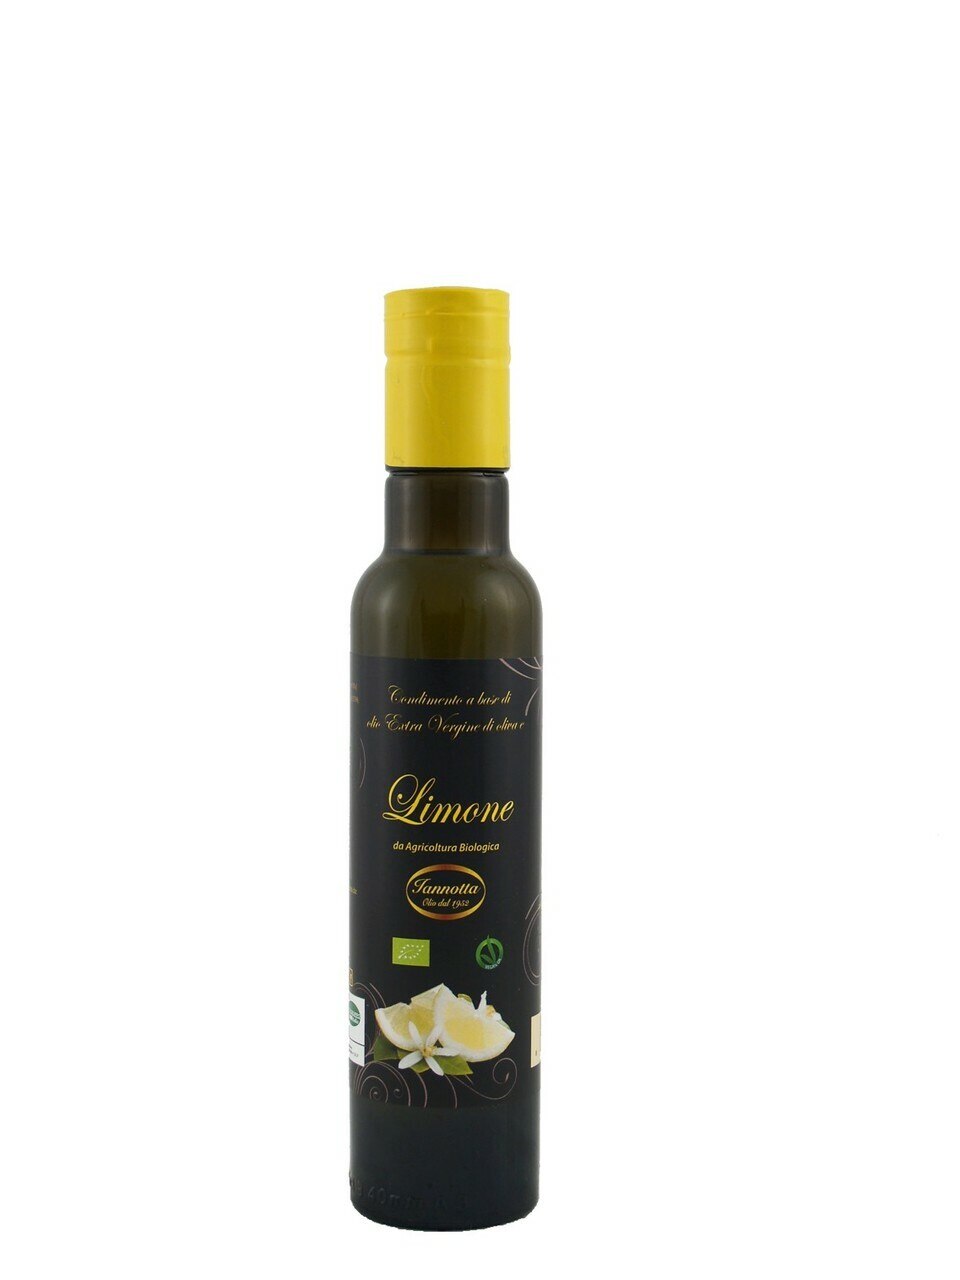 Iannotta Organic Crushed Lemon 15-Pack 2021 Harvest